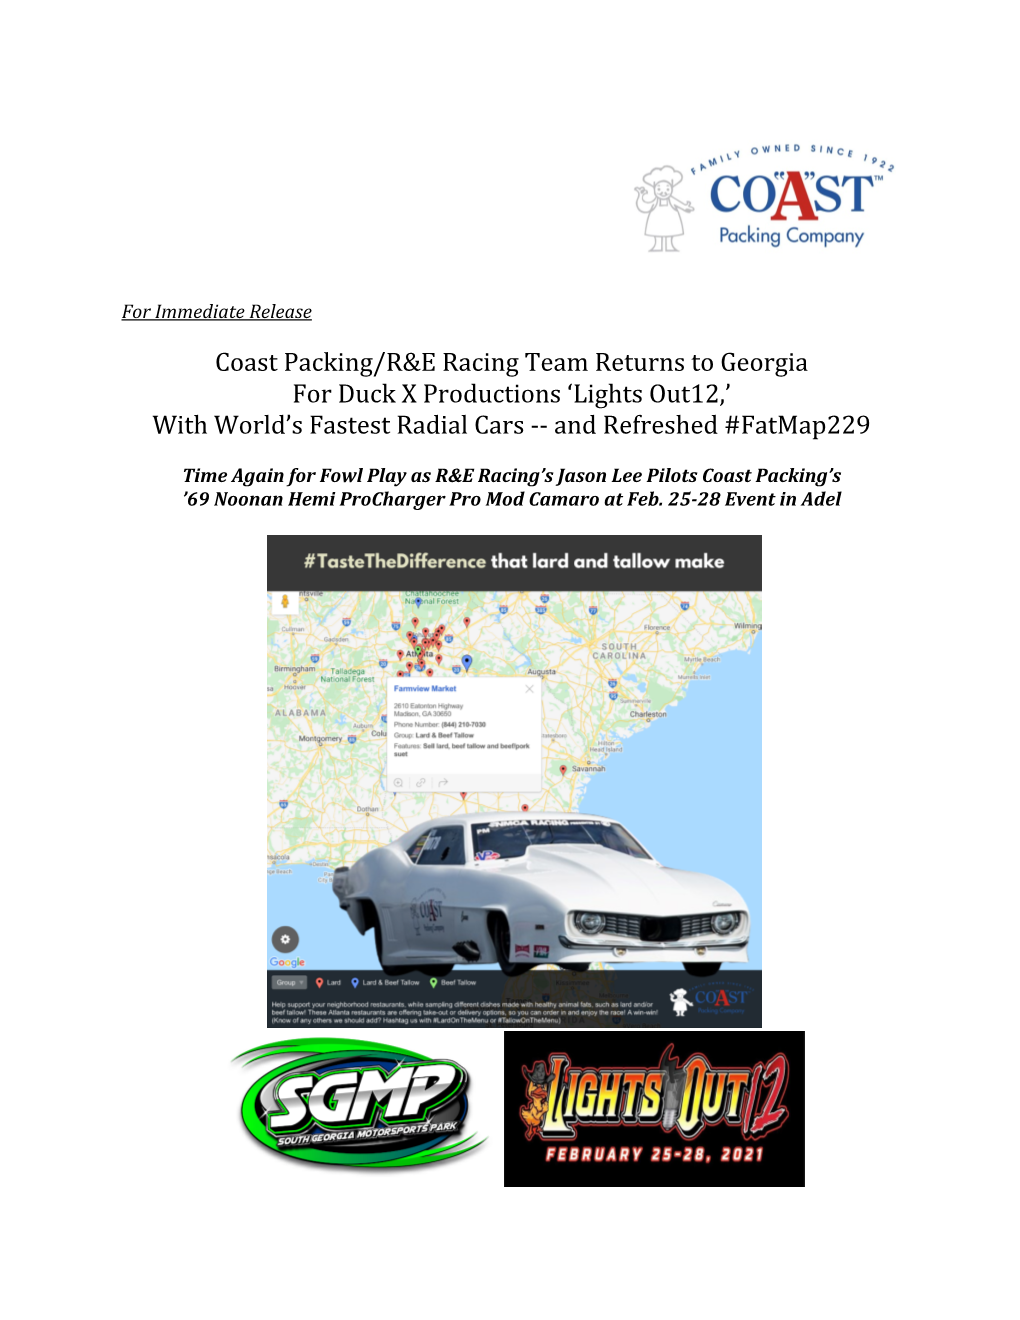 Coast Packing/R&E Racing Team Returns to Georgia for Duck X